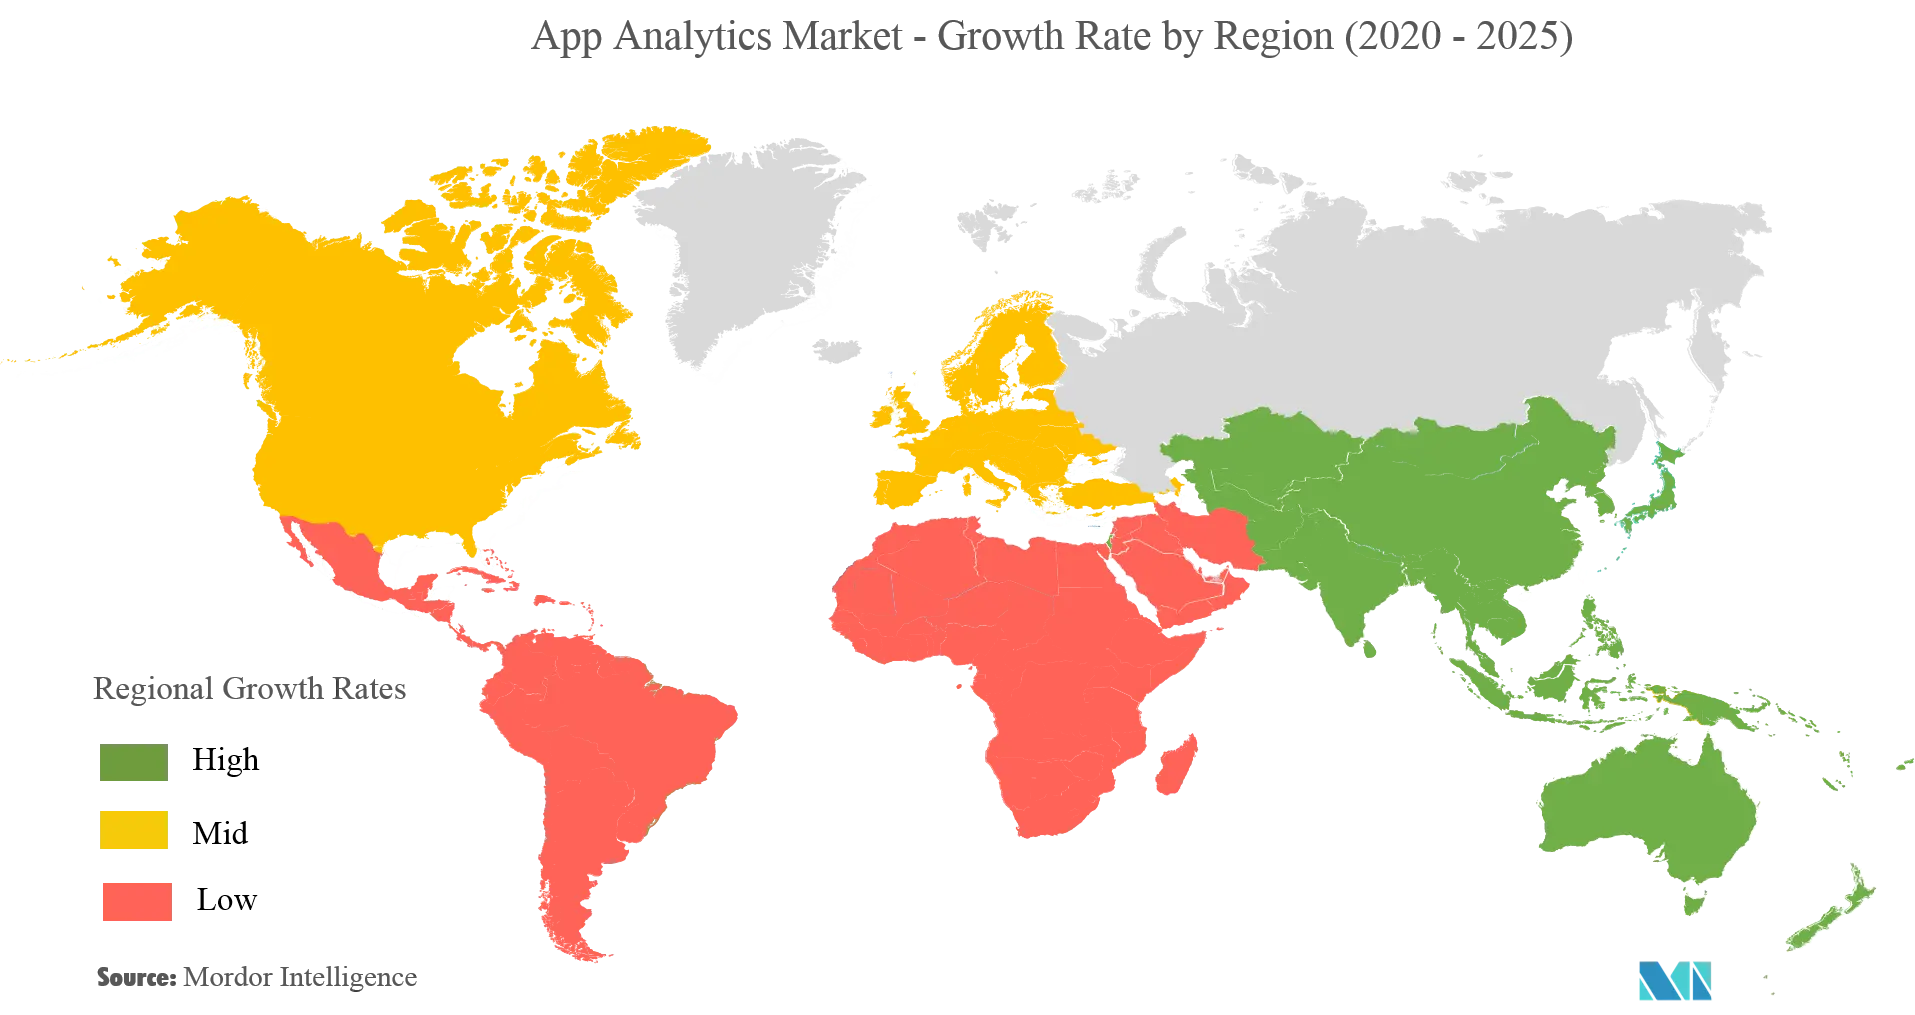 App Analytics Market - Growth Rate by Region (2020 - 2025)